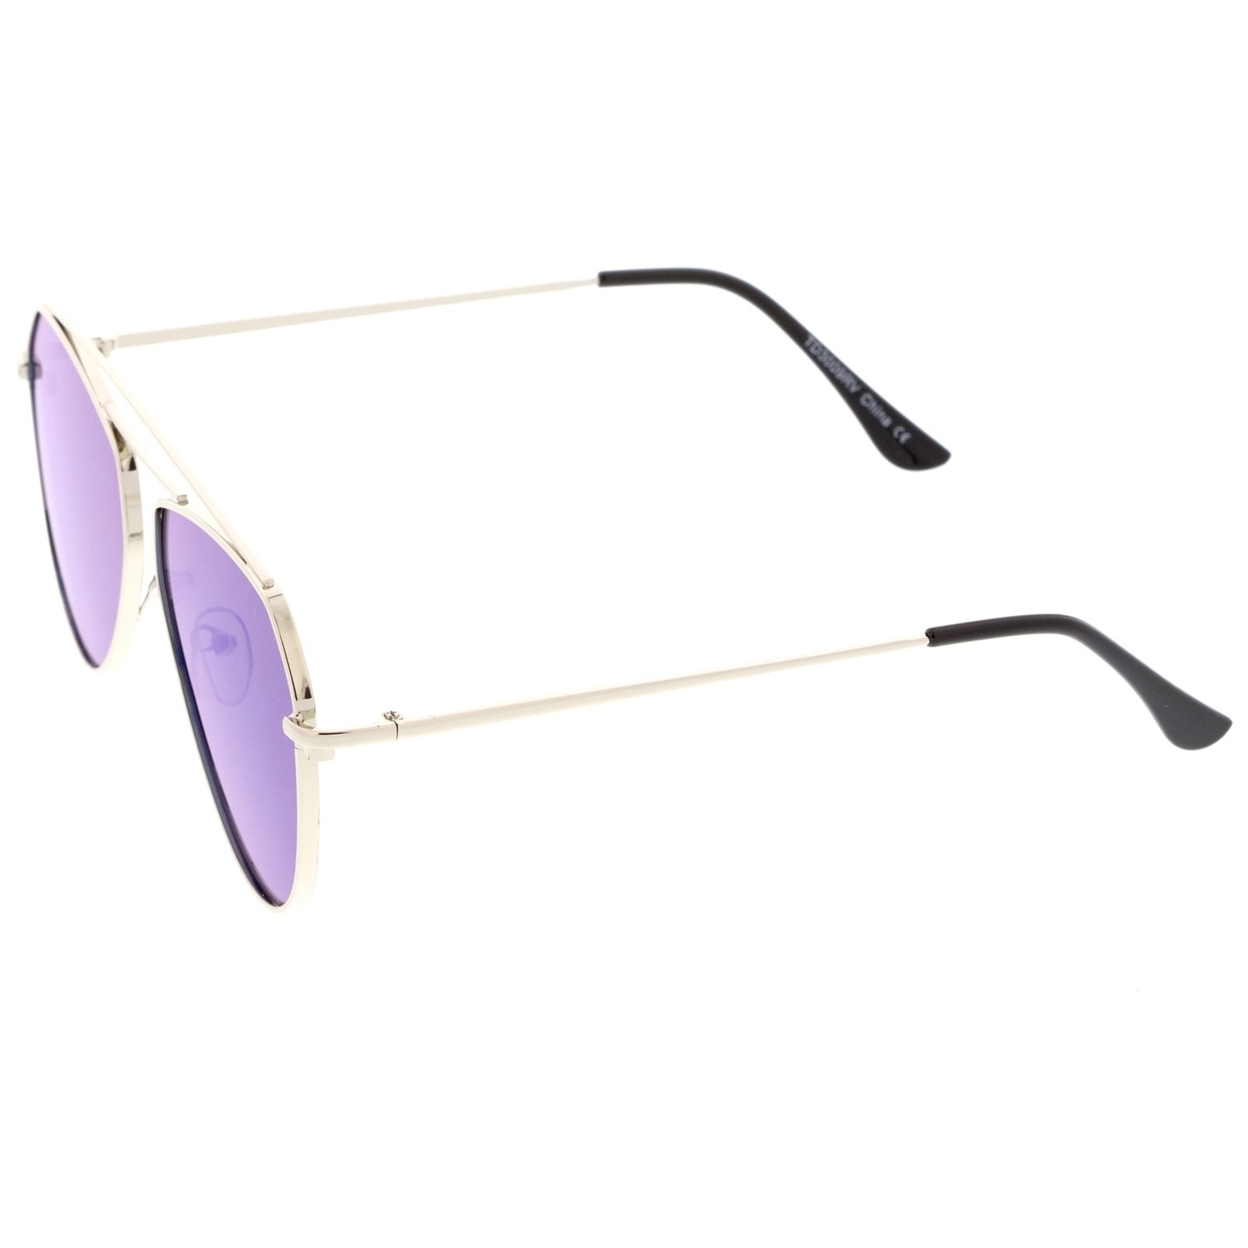 Modern Metal Frame Double Bridge Colored Mirror Flat Lens Aviator Sunglasses 52mm - Silver / Silver Mirror